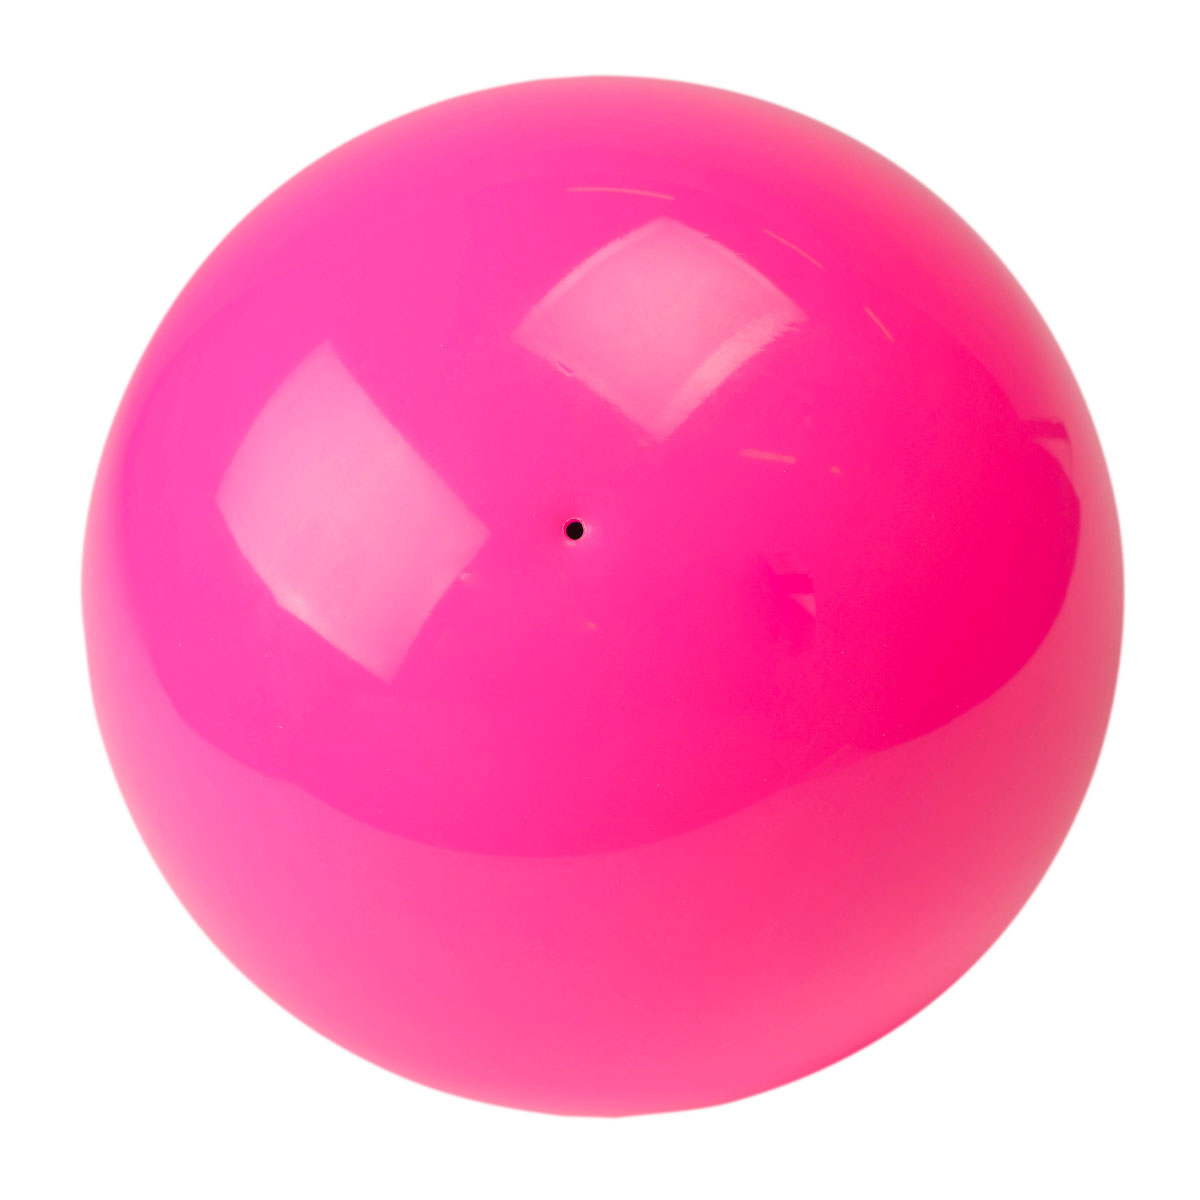 New Generation ball 16 cm